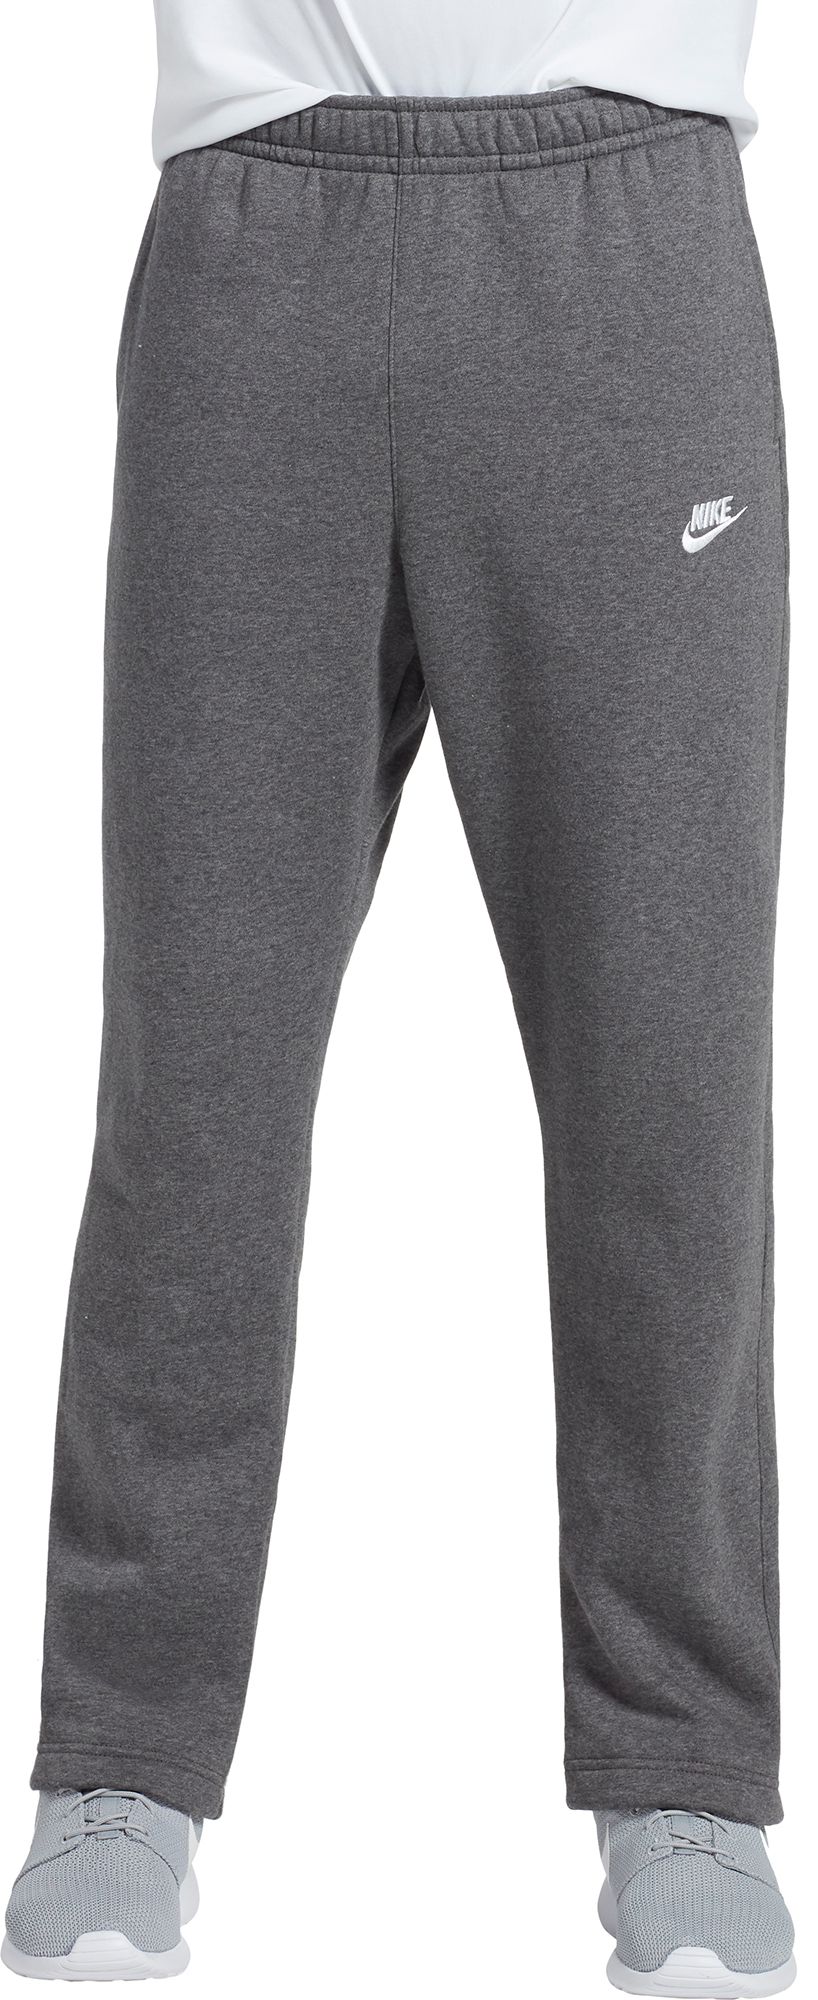 nike grey and black sweatpants